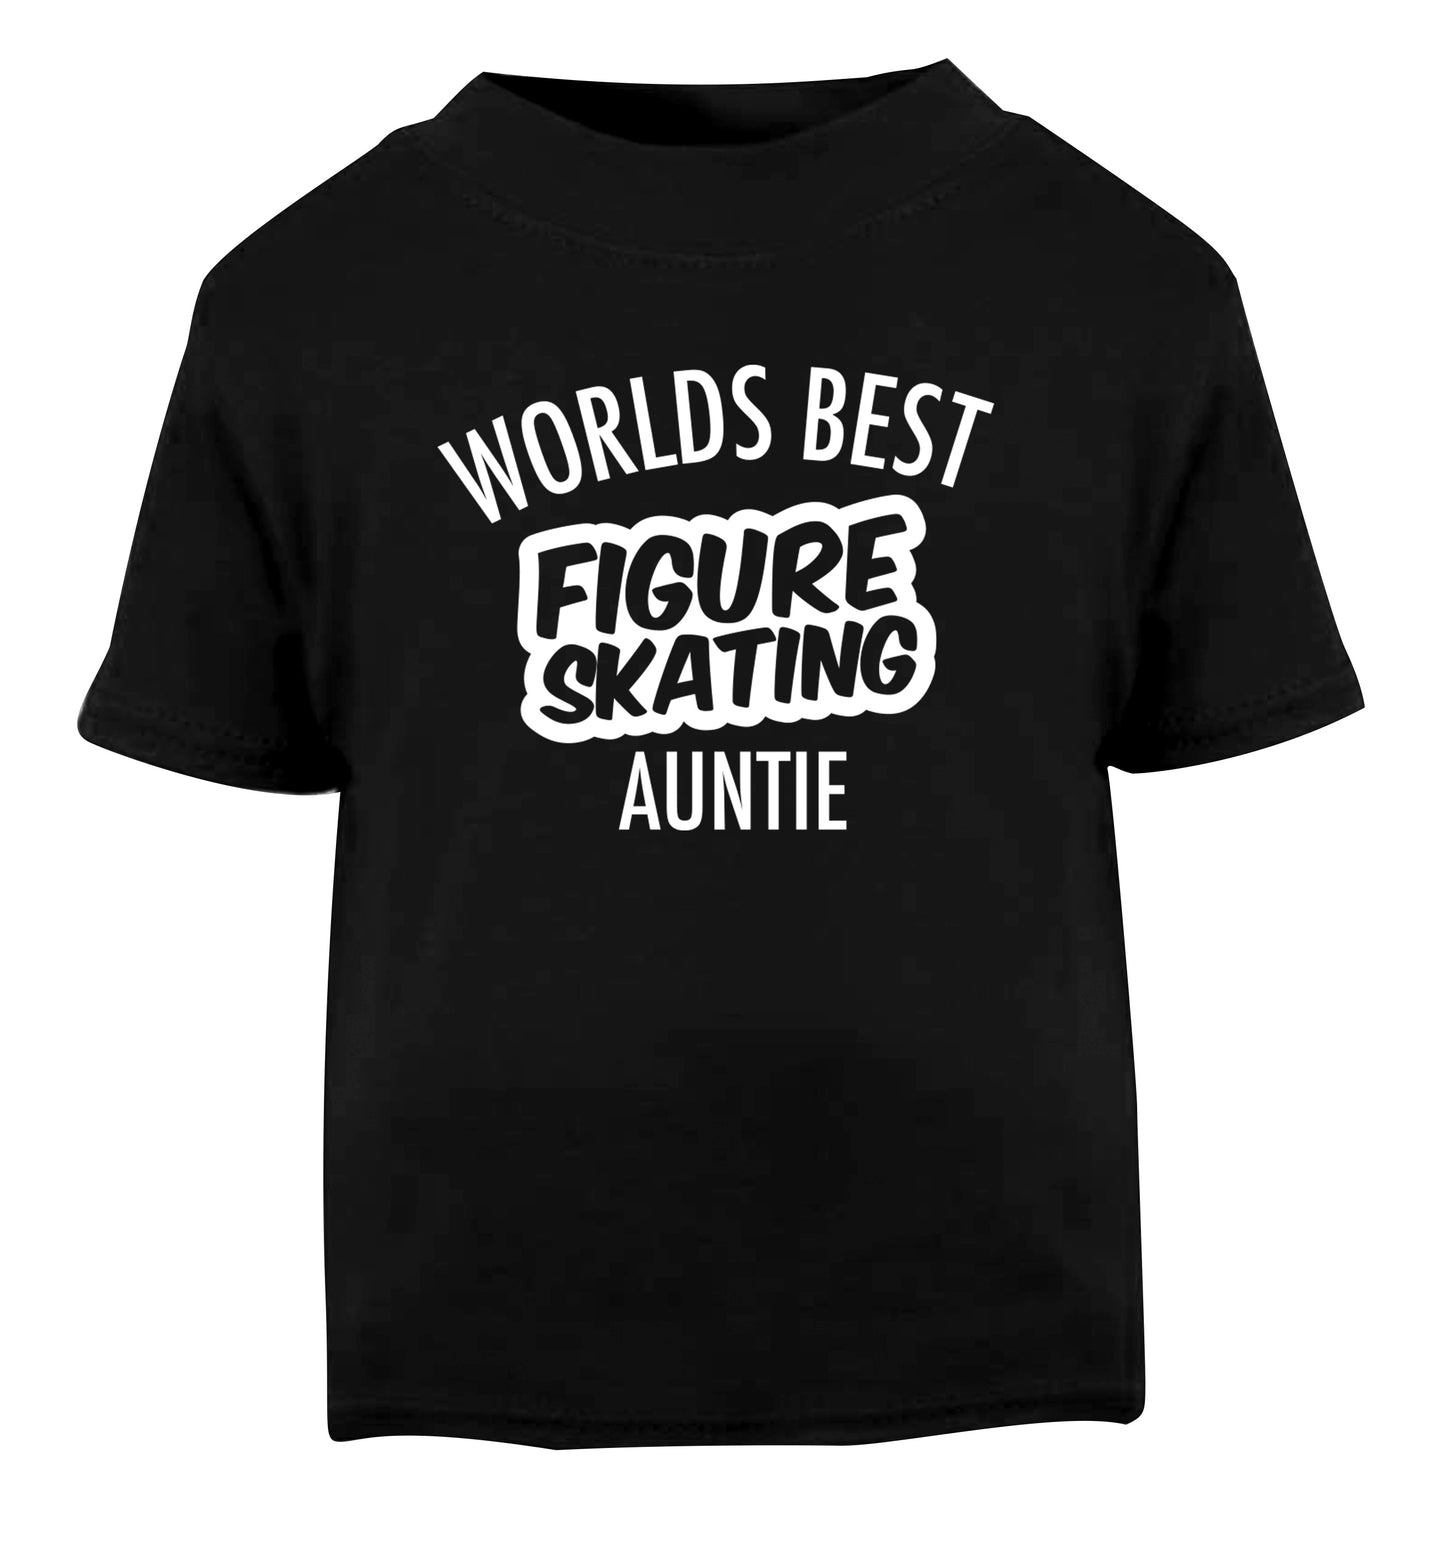 Worlds best figure skating auntie Black Baby Toddler Tshirt 2 years